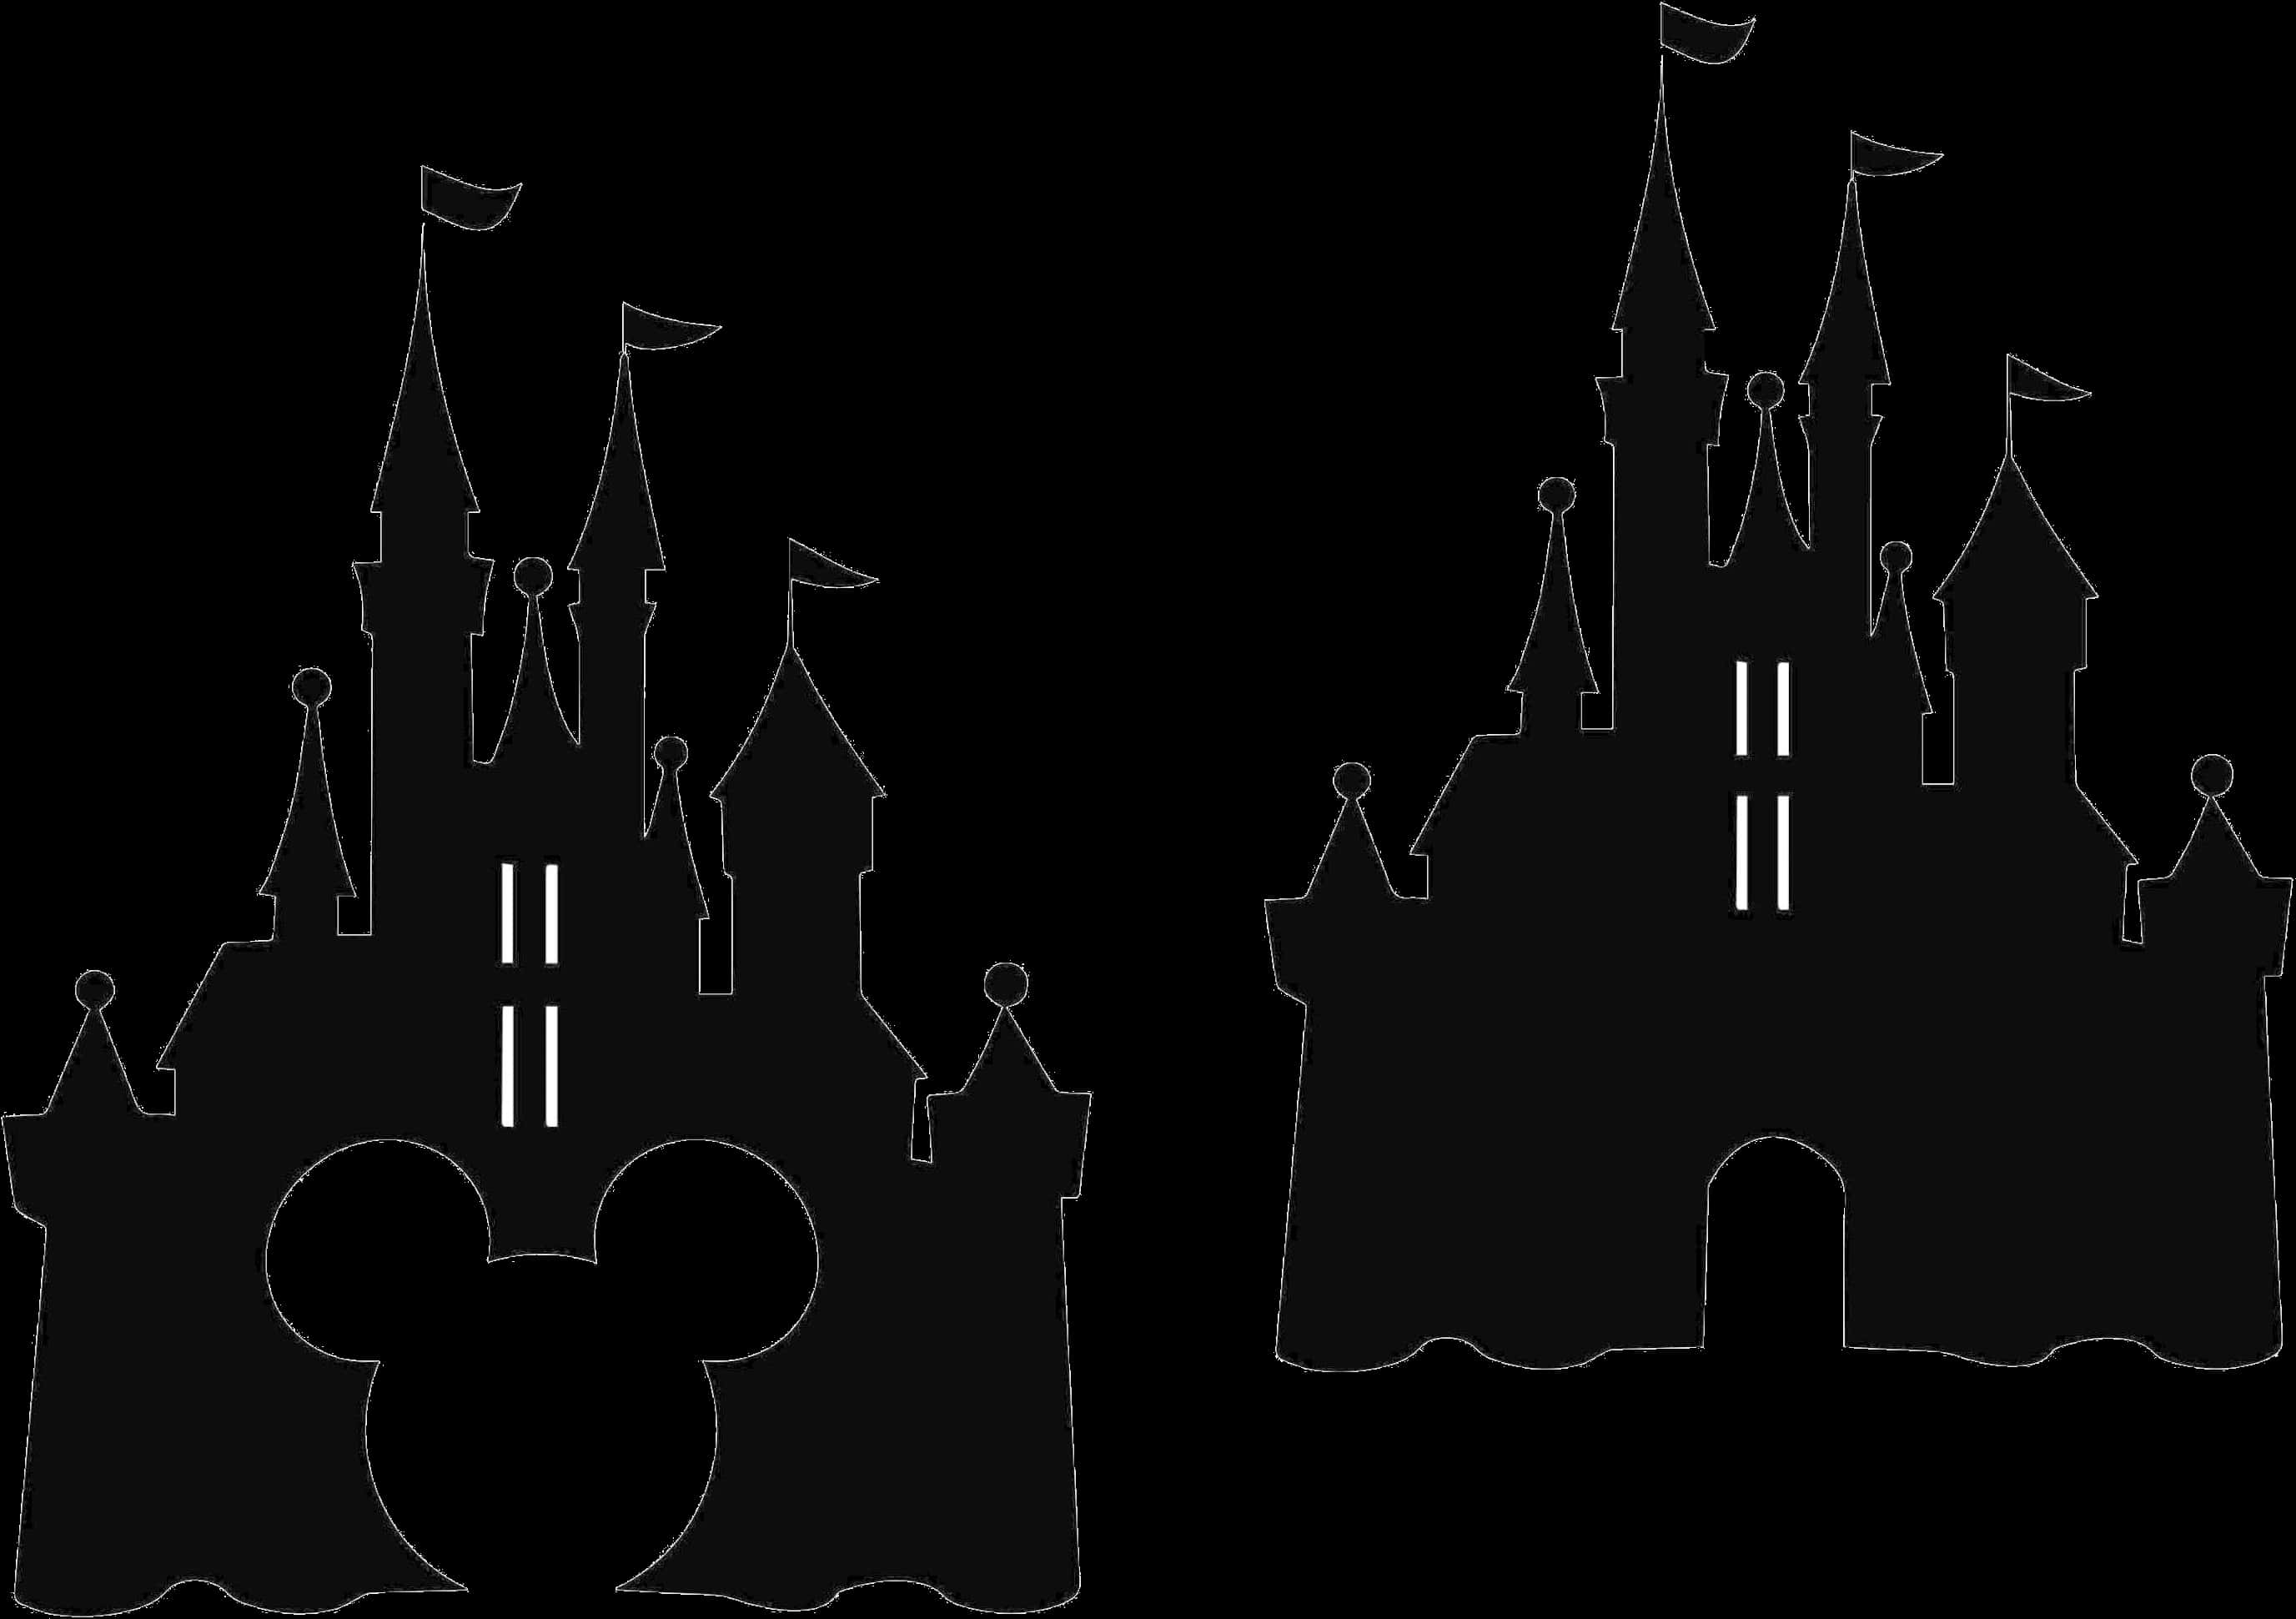 Disney Castle Silhouette Graphic